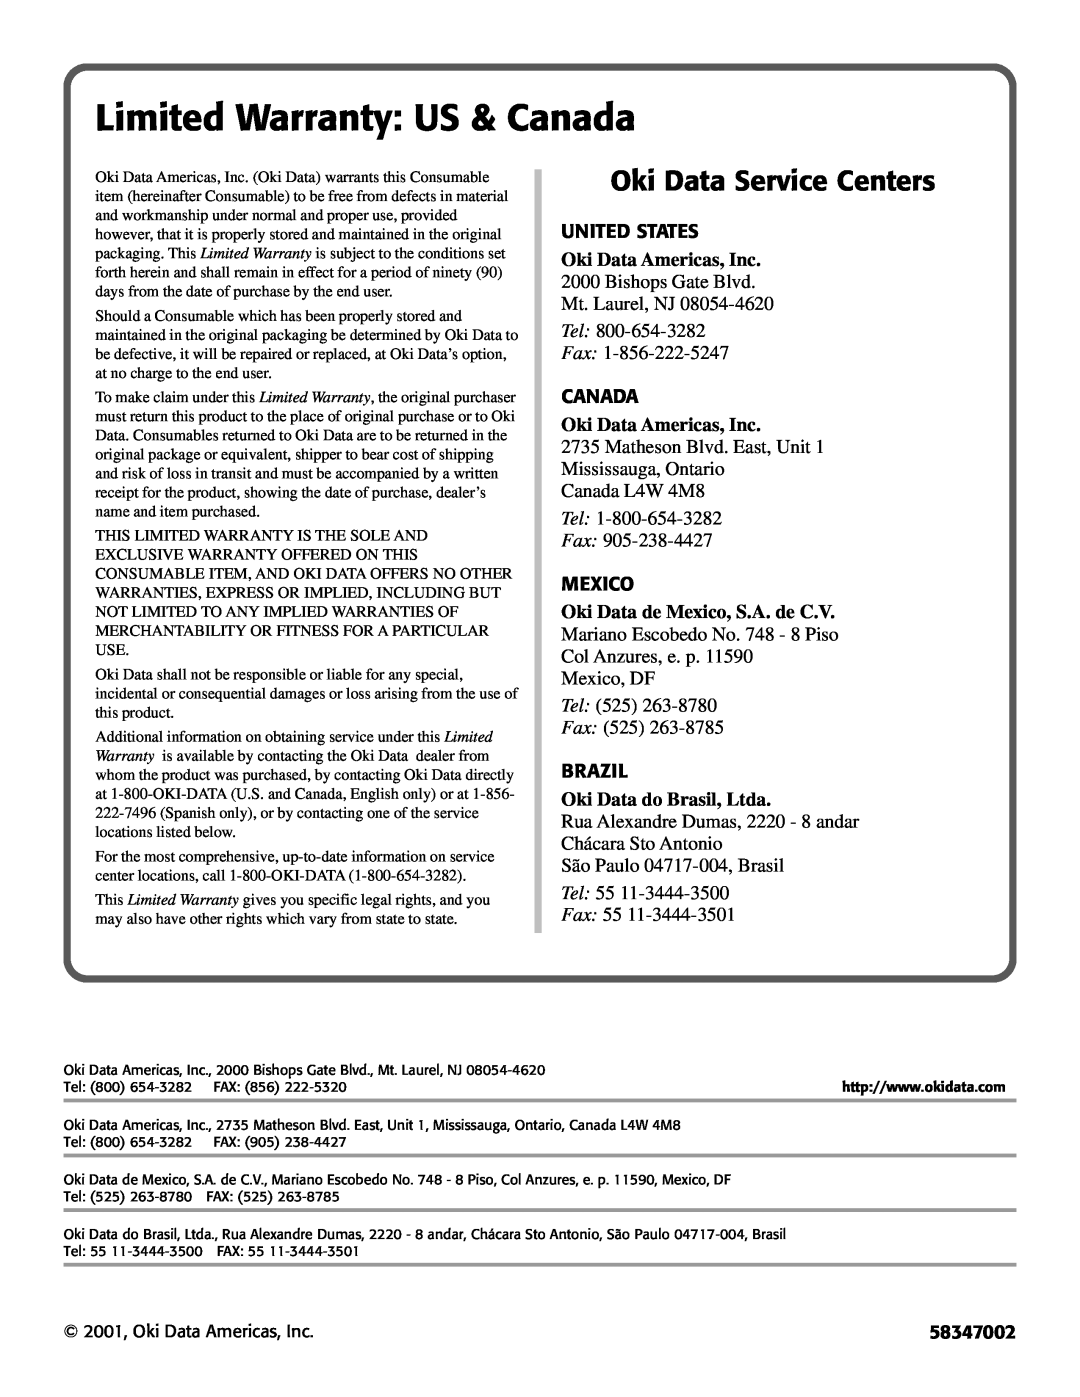 Oki 41515207 Limited Warranty US & Canada, Oki Data Service Centers, United States, Oki Data Americas, Inc, Mexico, Brazil 